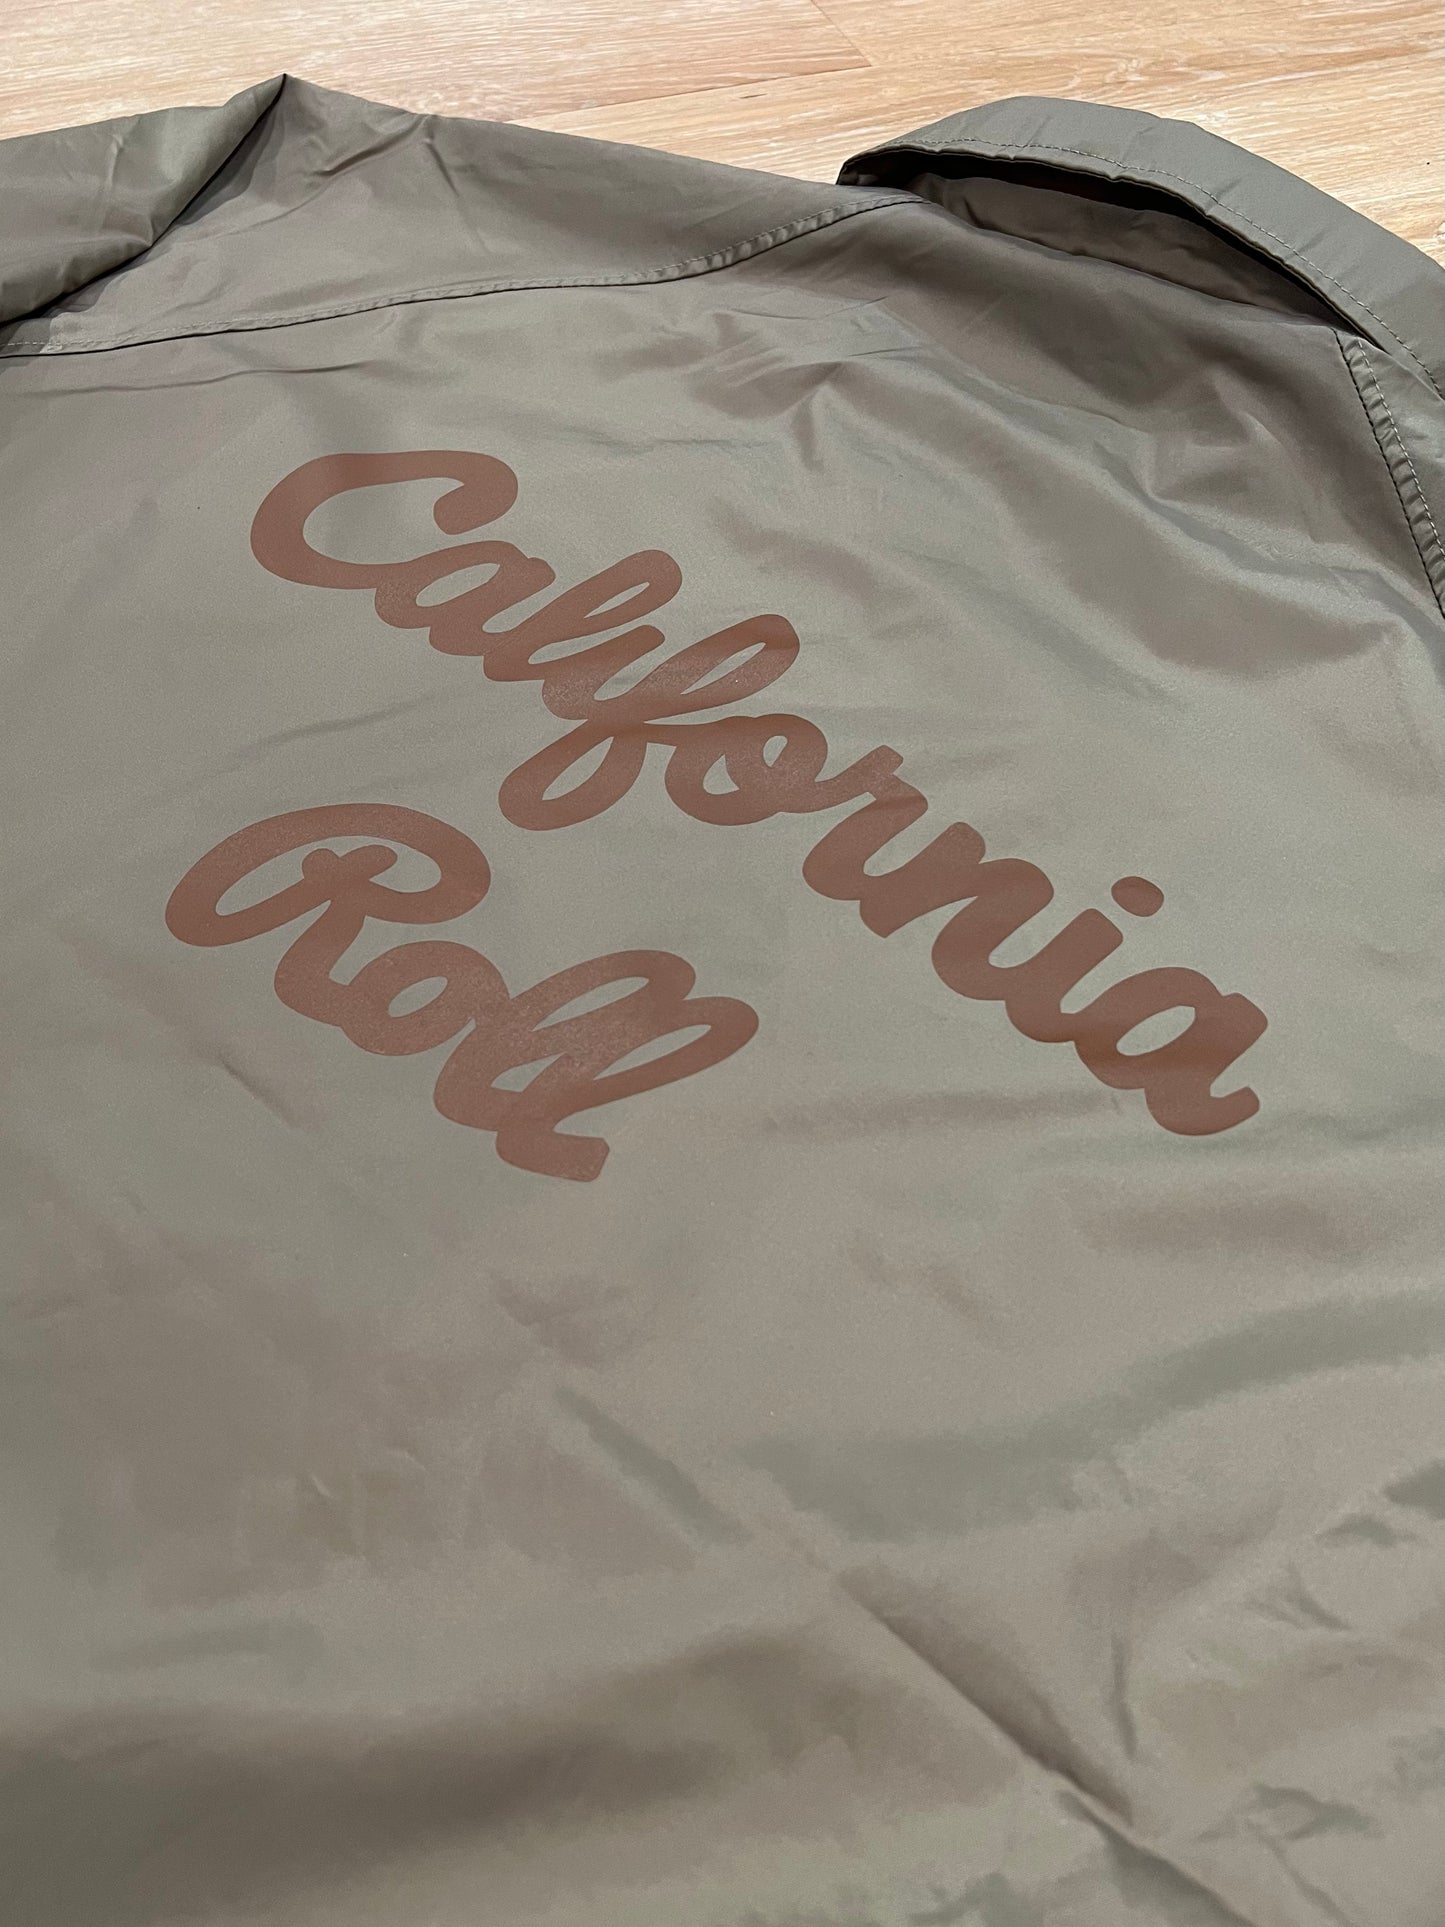 【先行限定販売】CP California Roll Coach jackets  / Khaki / CIDER10 #02